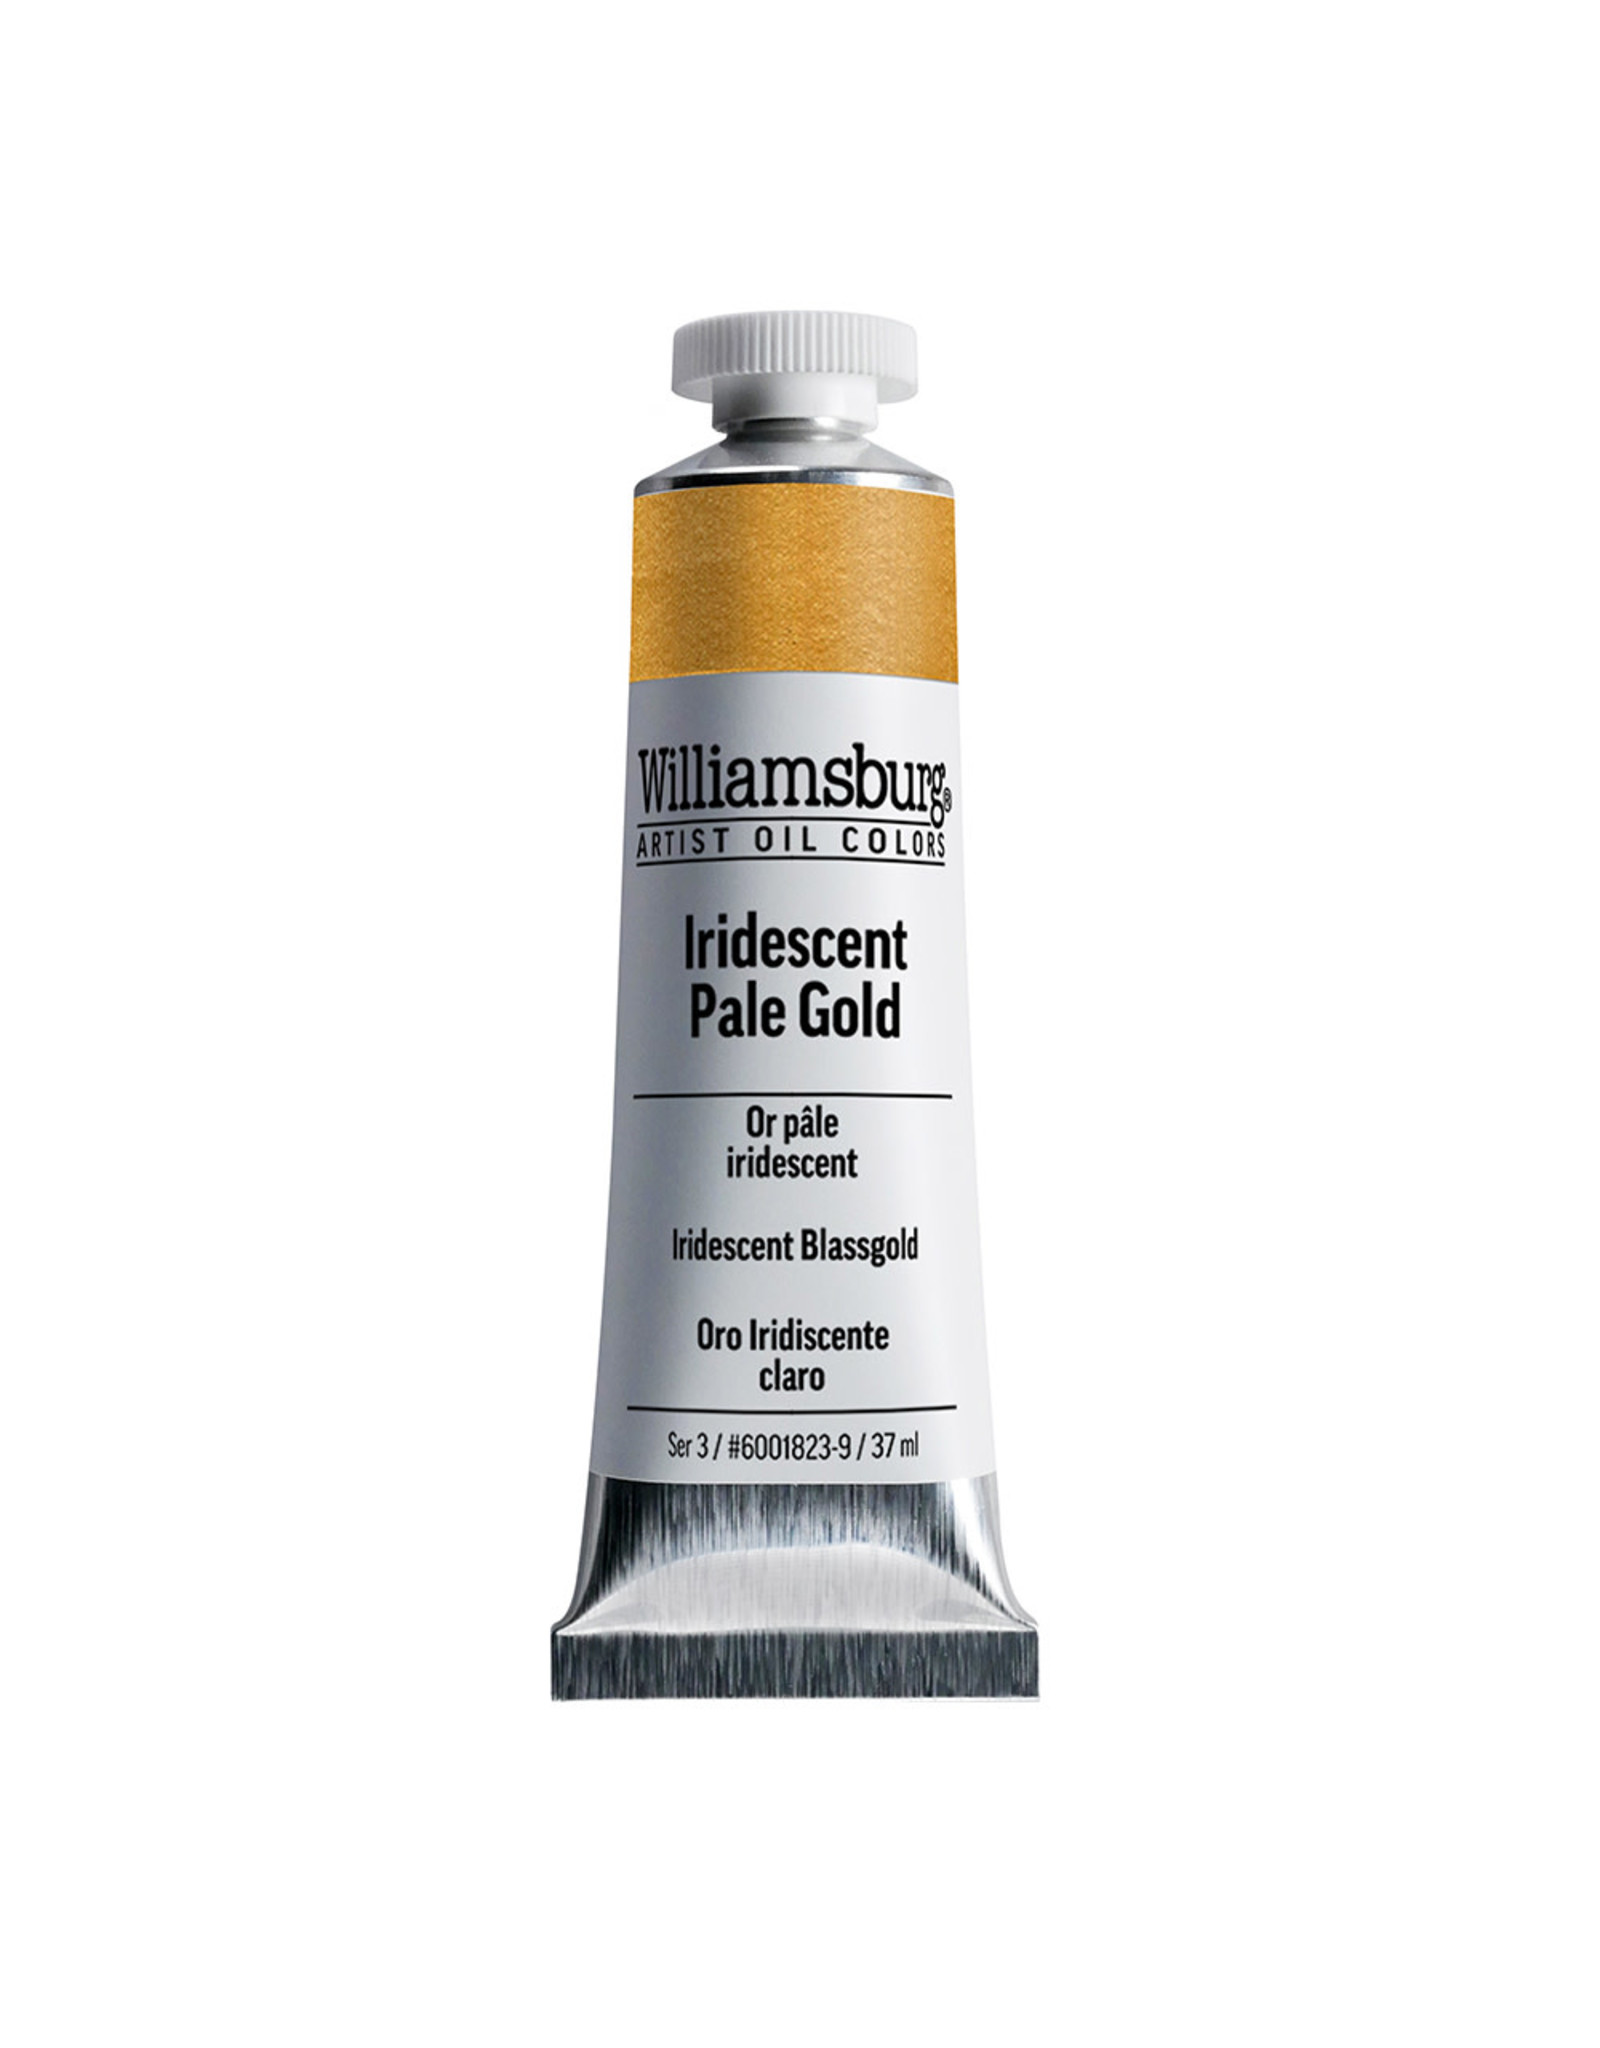 Golden Williamsburg Handmade Oil Colors, Iridescent Pale Gold 37ml